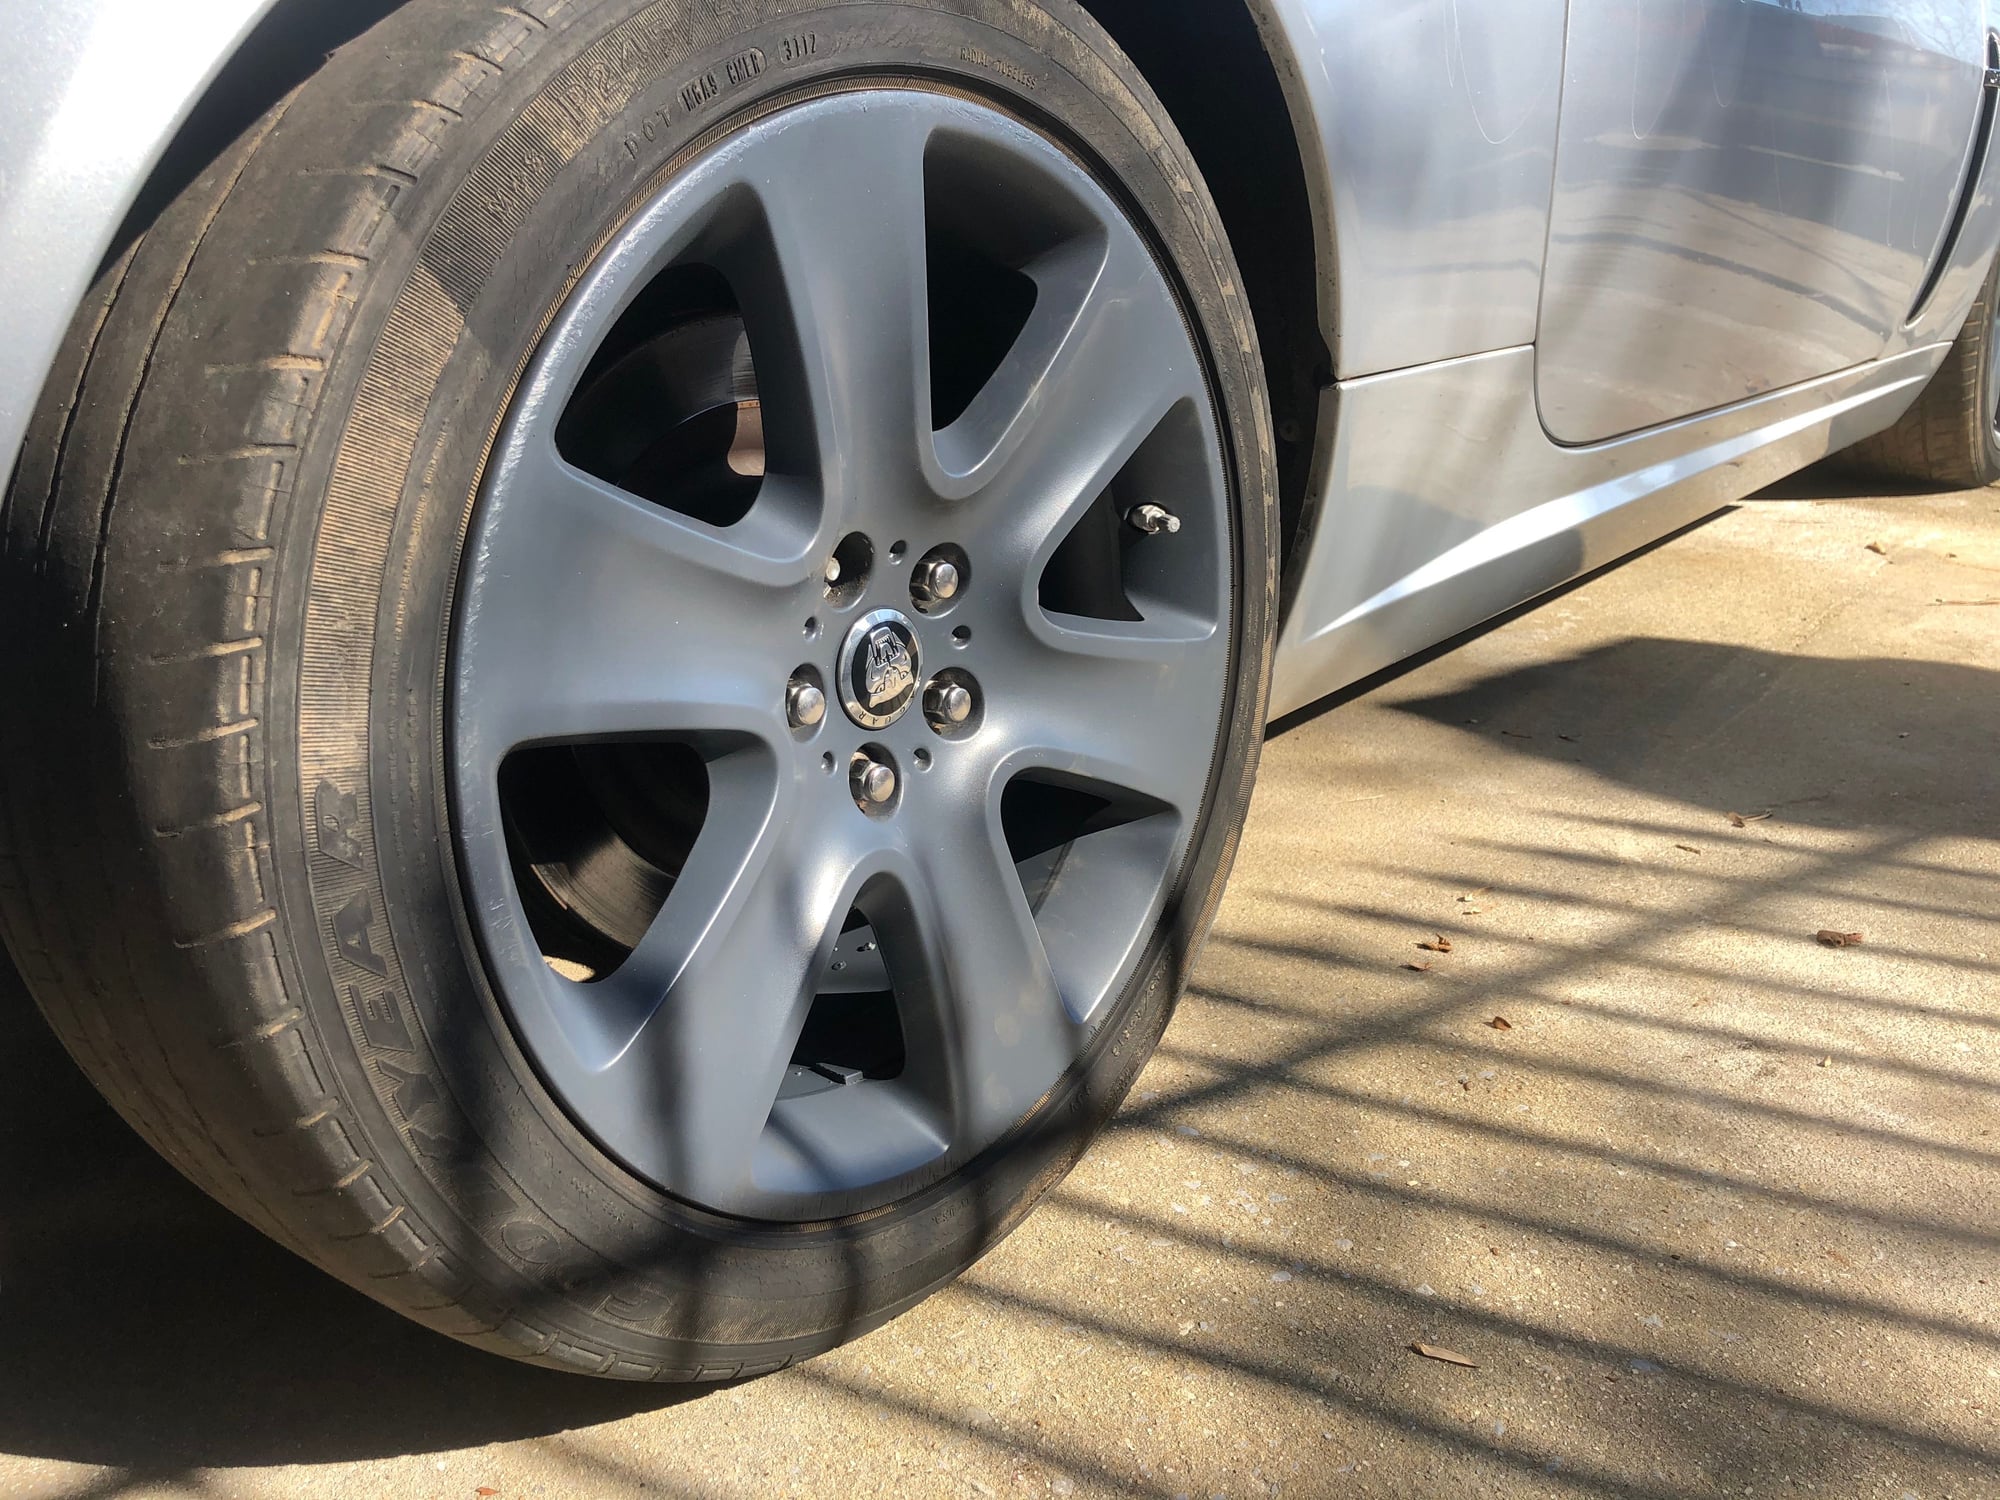 Wheels and Tires/Axles - 18 inch XF wheels - Used - 2012 to 2016 Jaguar XF - Marietta, GA 30066, United States